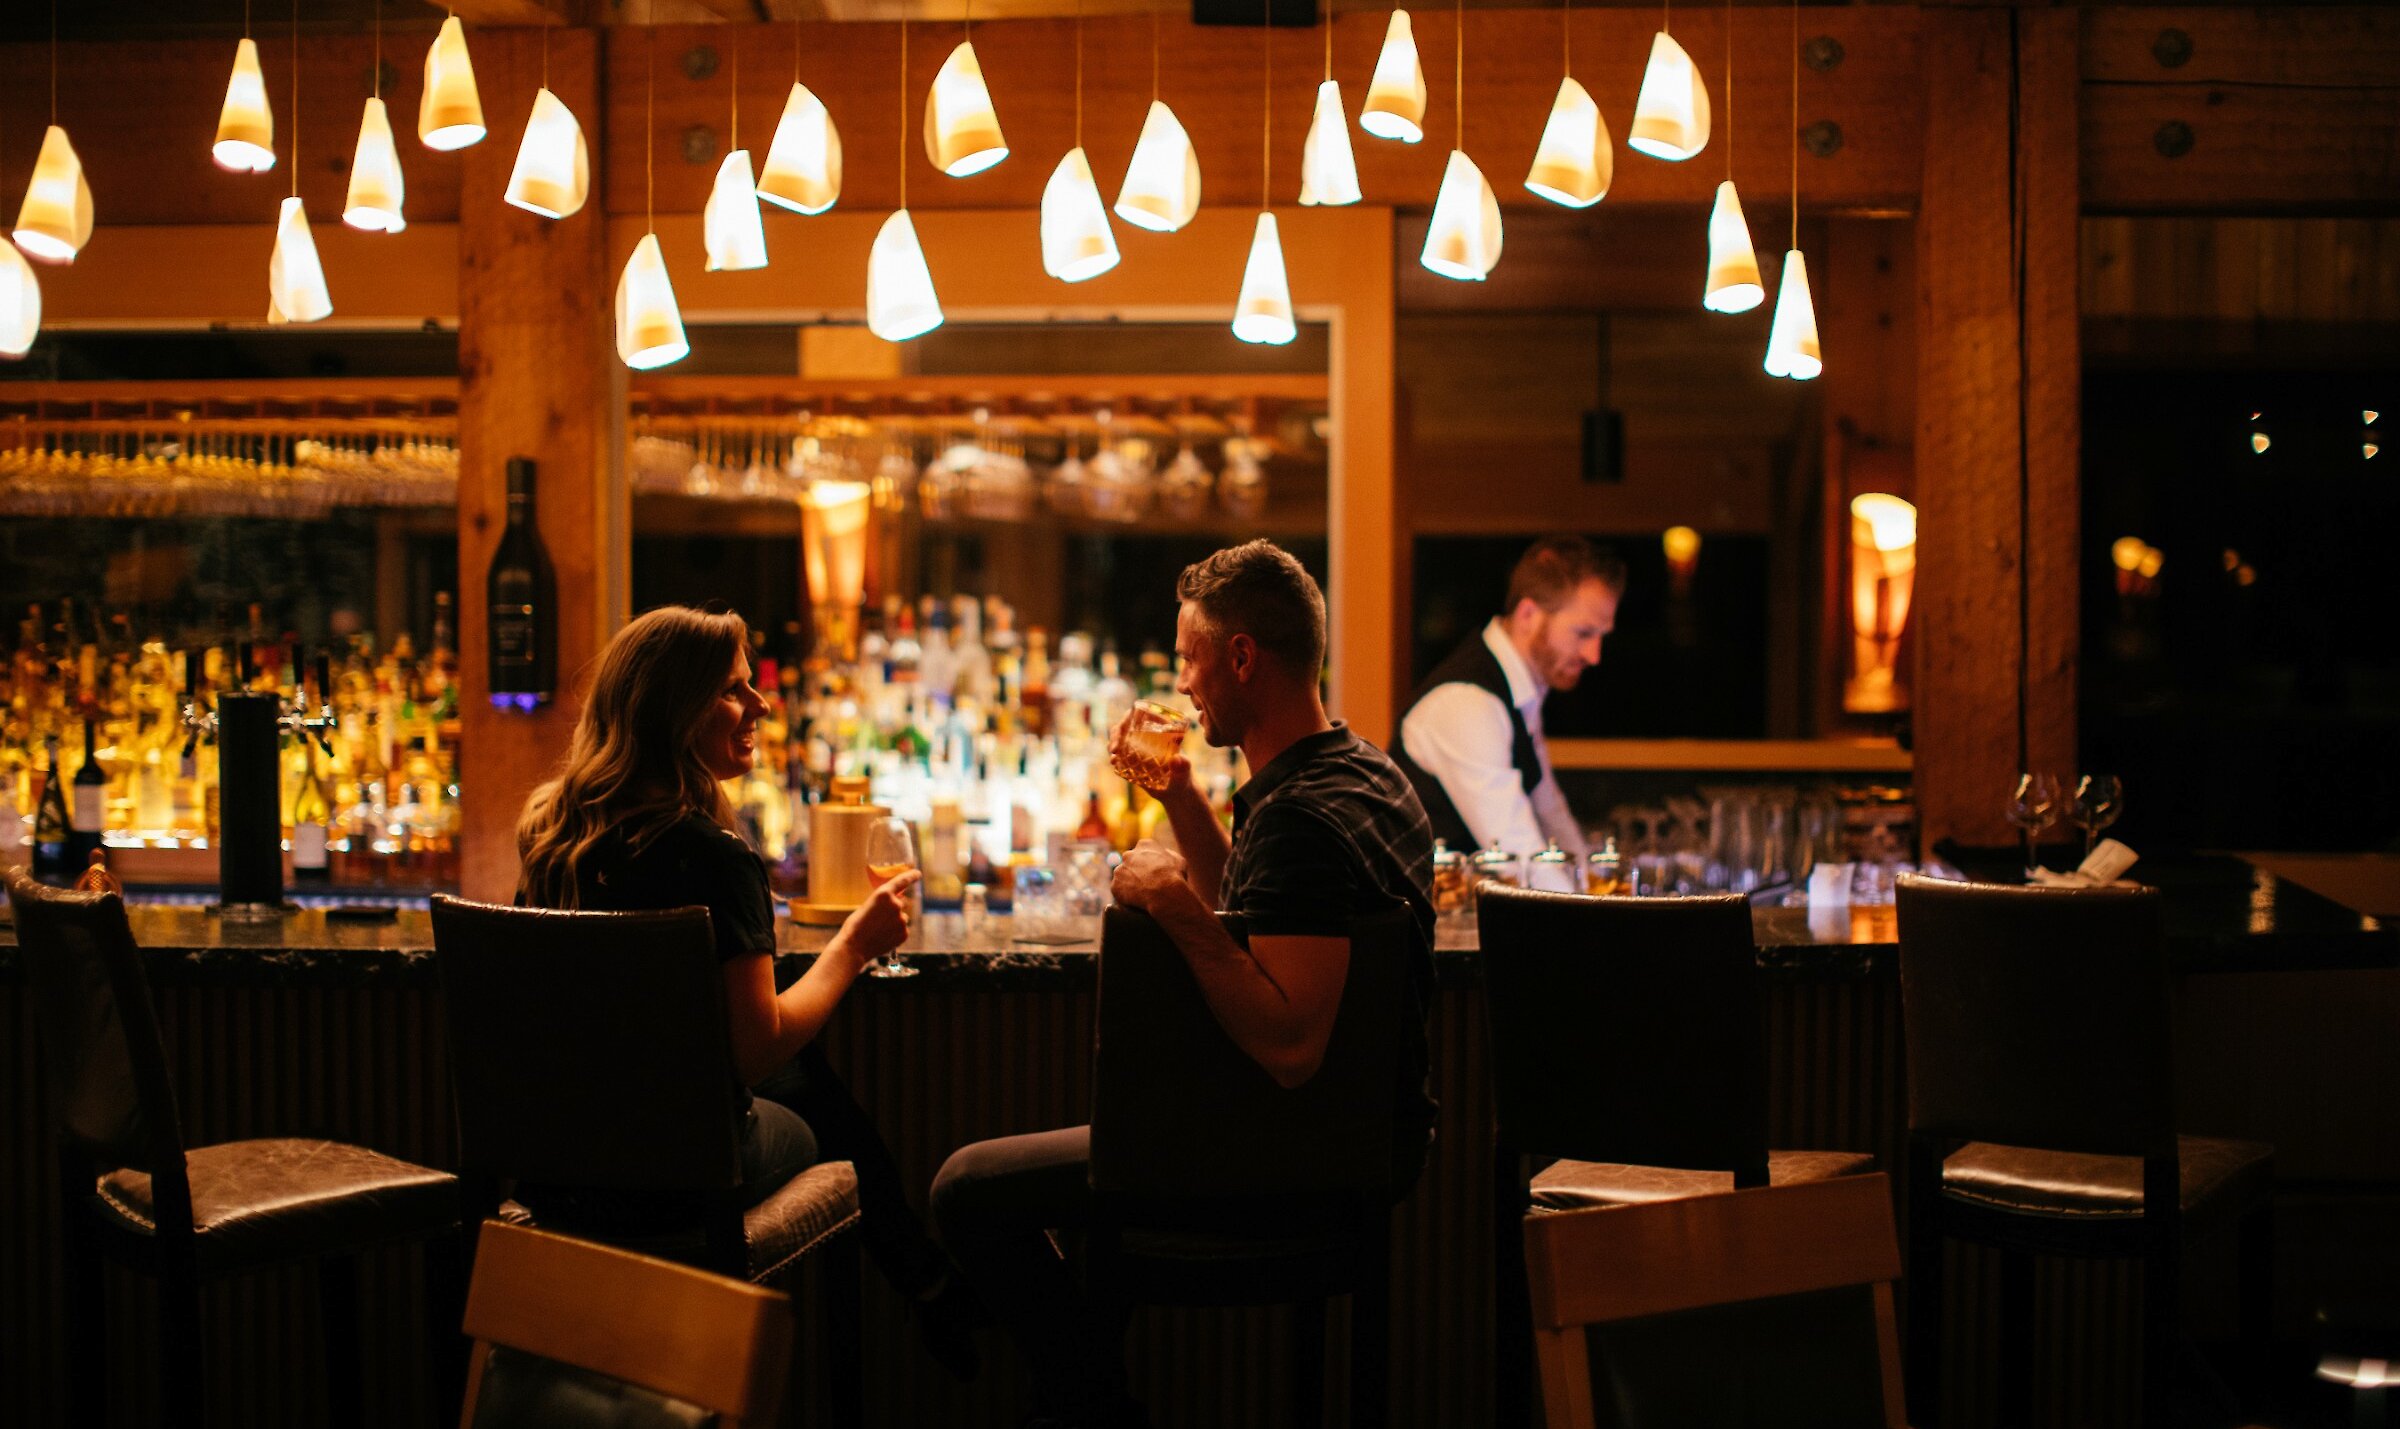 People dining at the bar at night